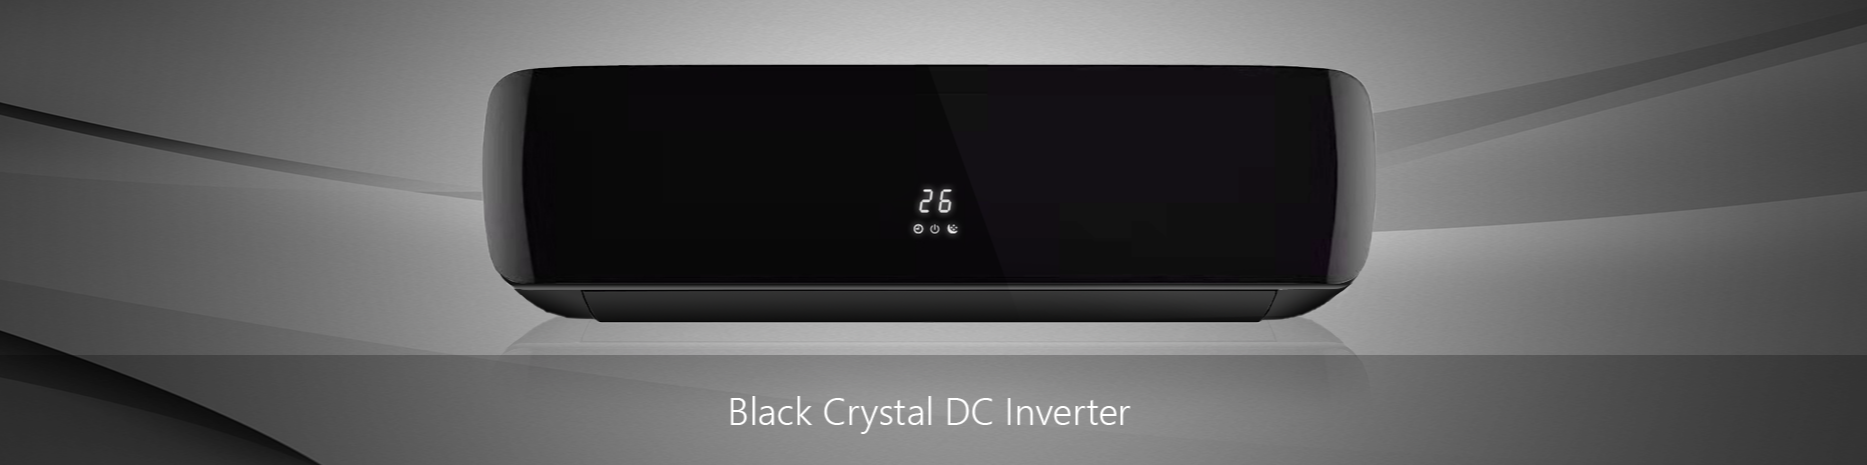 Cплит-системы Hisense серии BLACK CRYSTAL DC Inverter